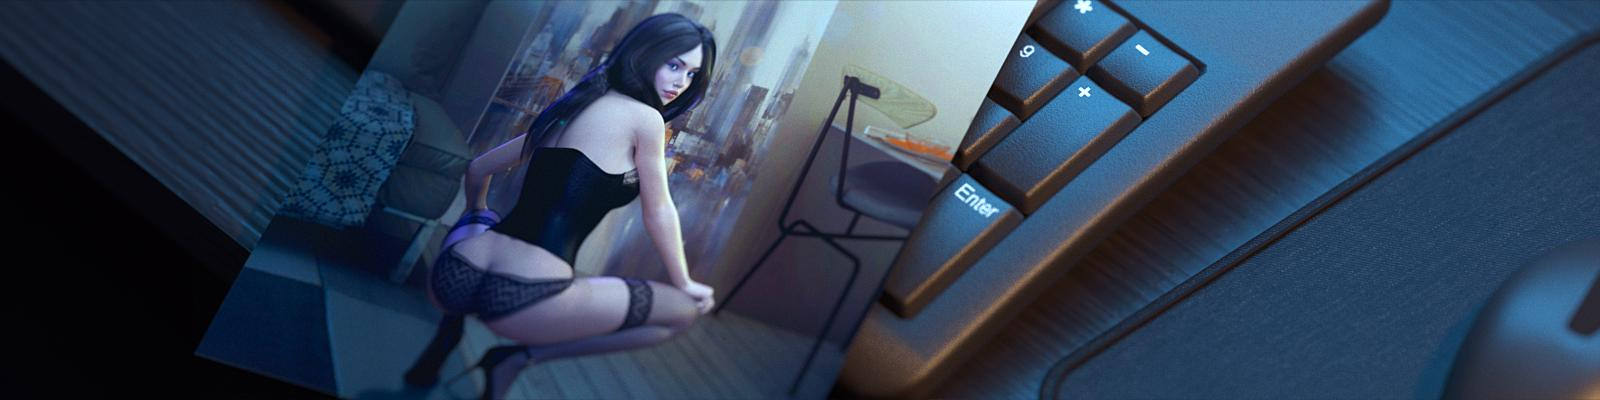 Porn Games 3d Download Free